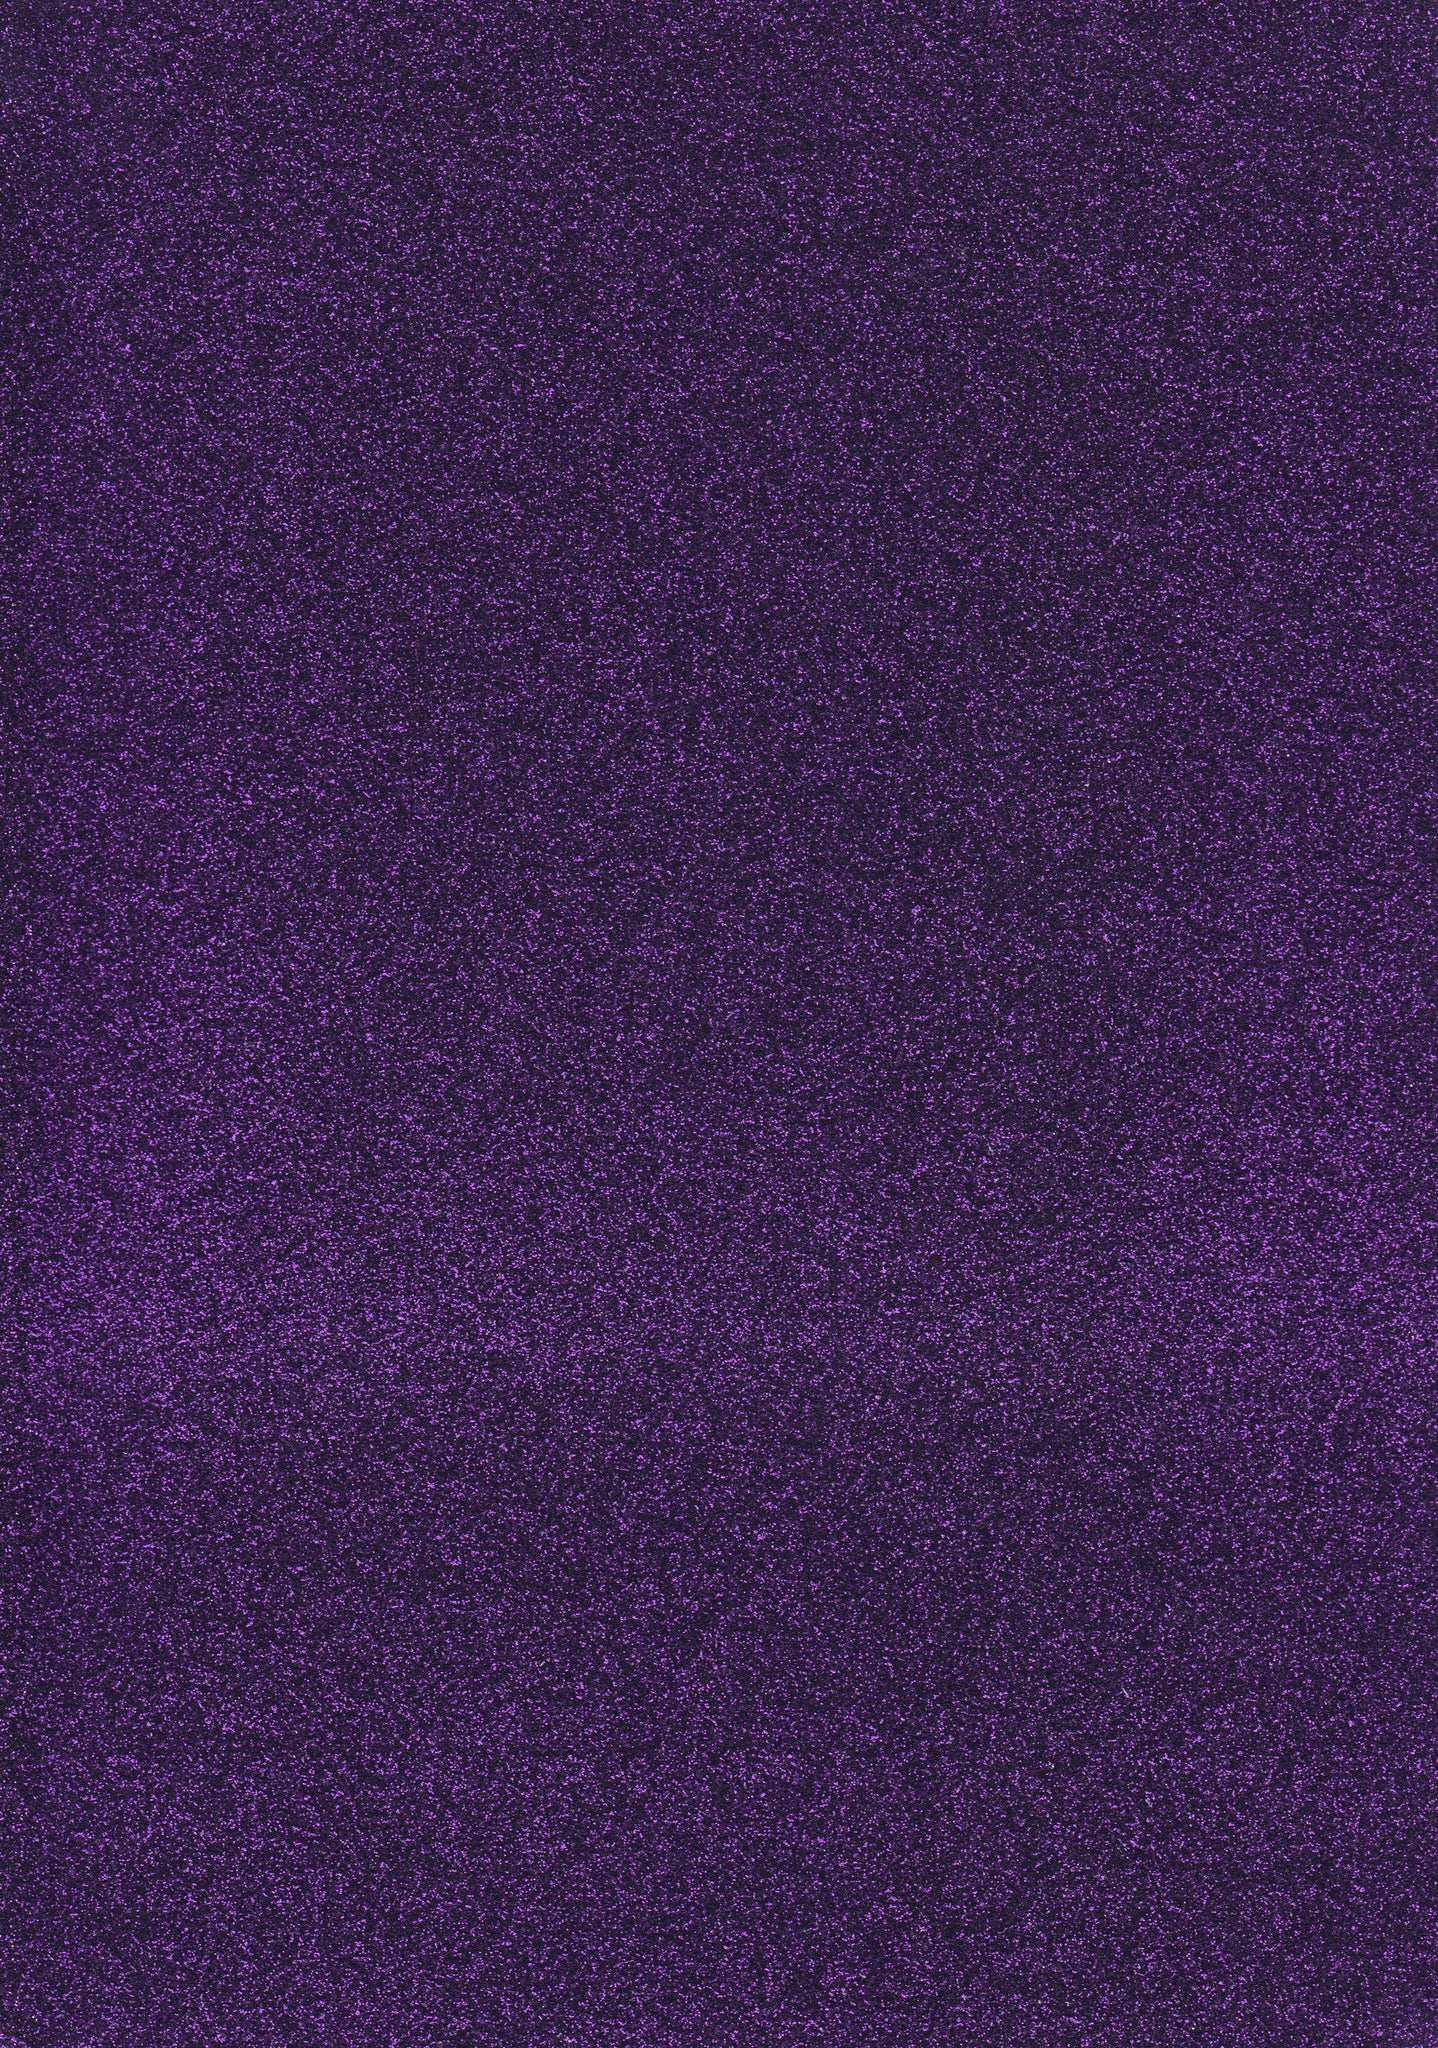 A4 Paper / No.162 Violet Glitter